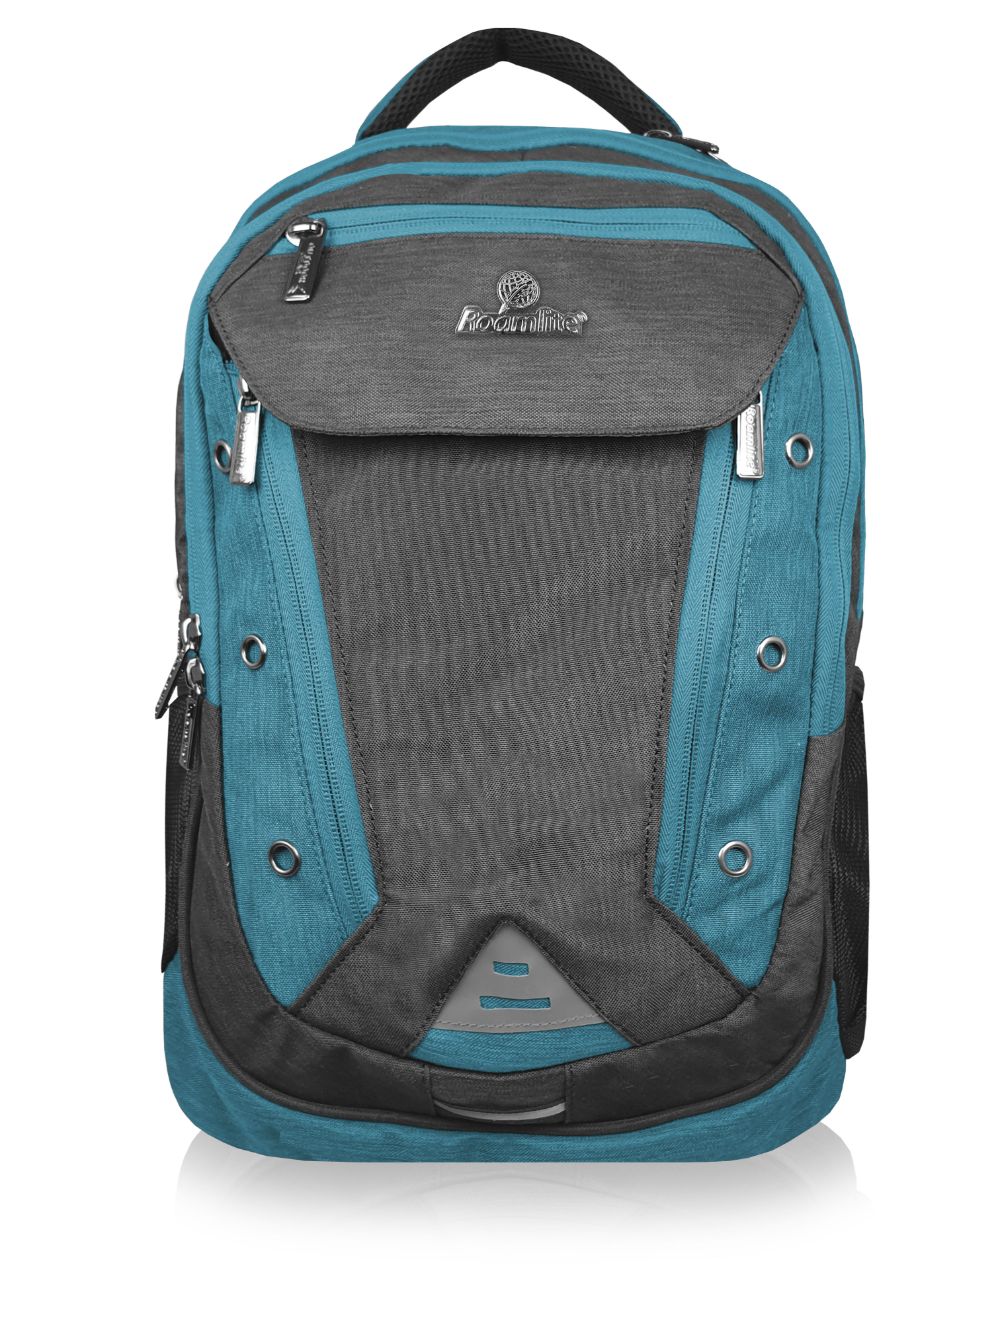 Roamlite School Backpack Grey Jade Jacquard RL912 front